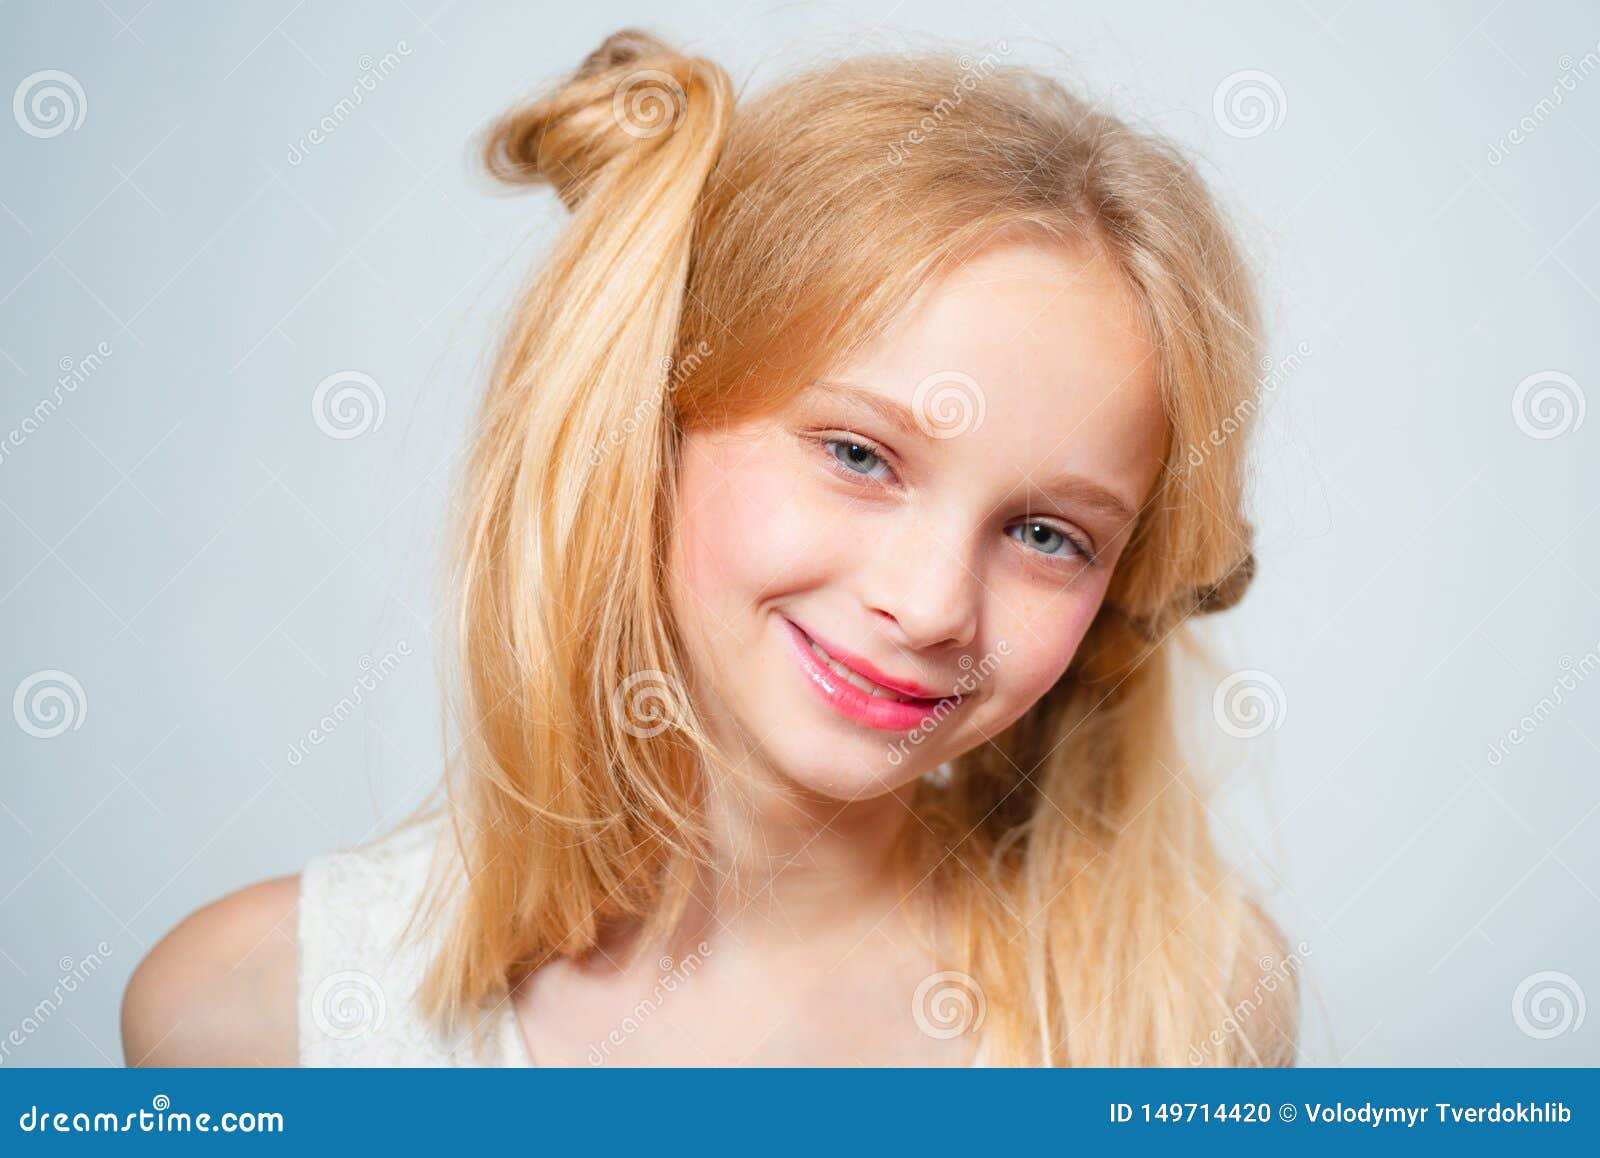 1. "Teenage girl with long blonde hair" - wide 3